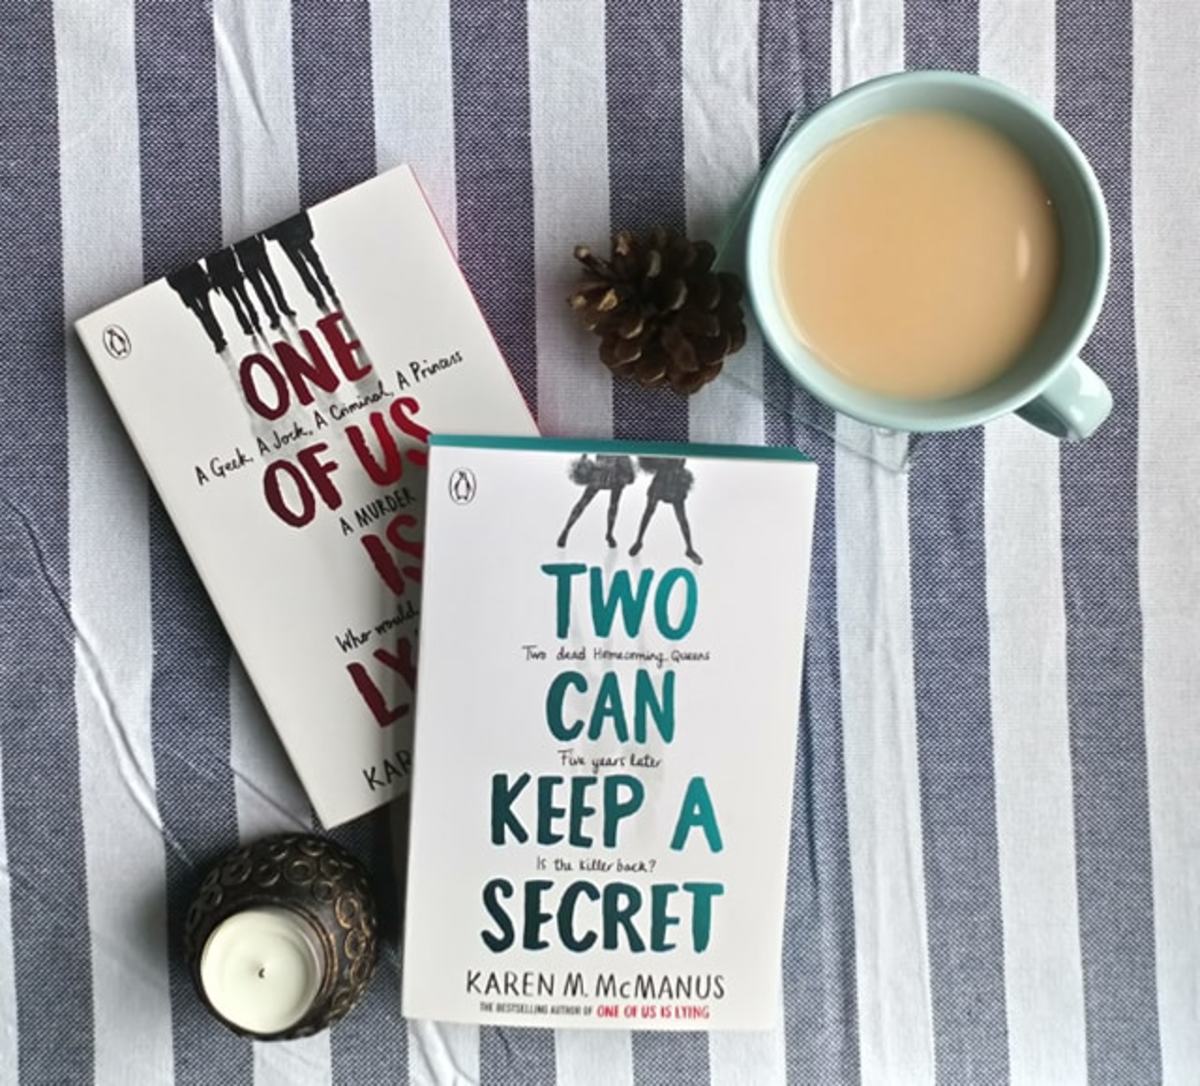 "Two Can Keep A Secret" by Karen M. McManus